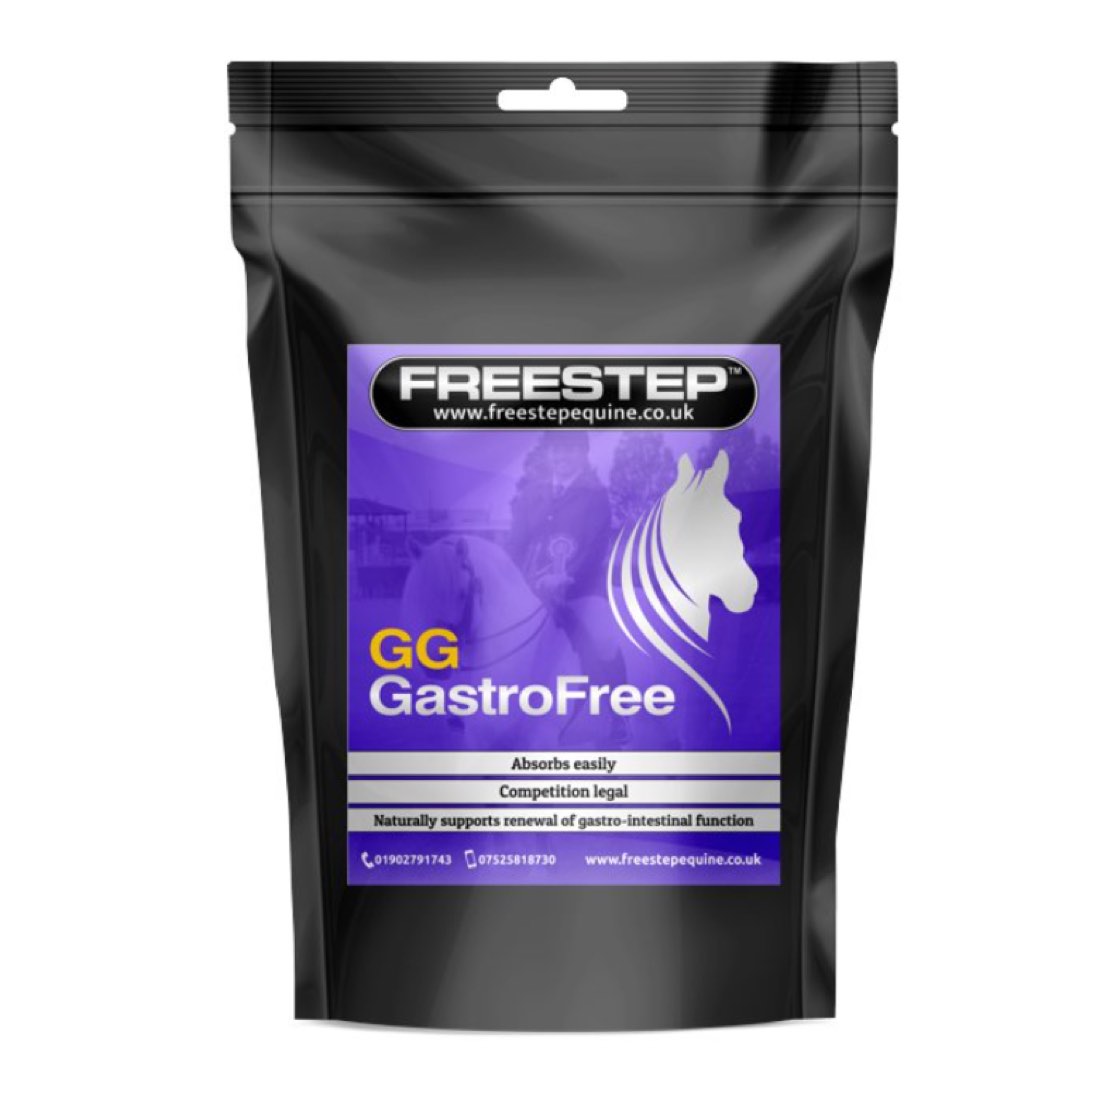 Freestep GG Gastrofree